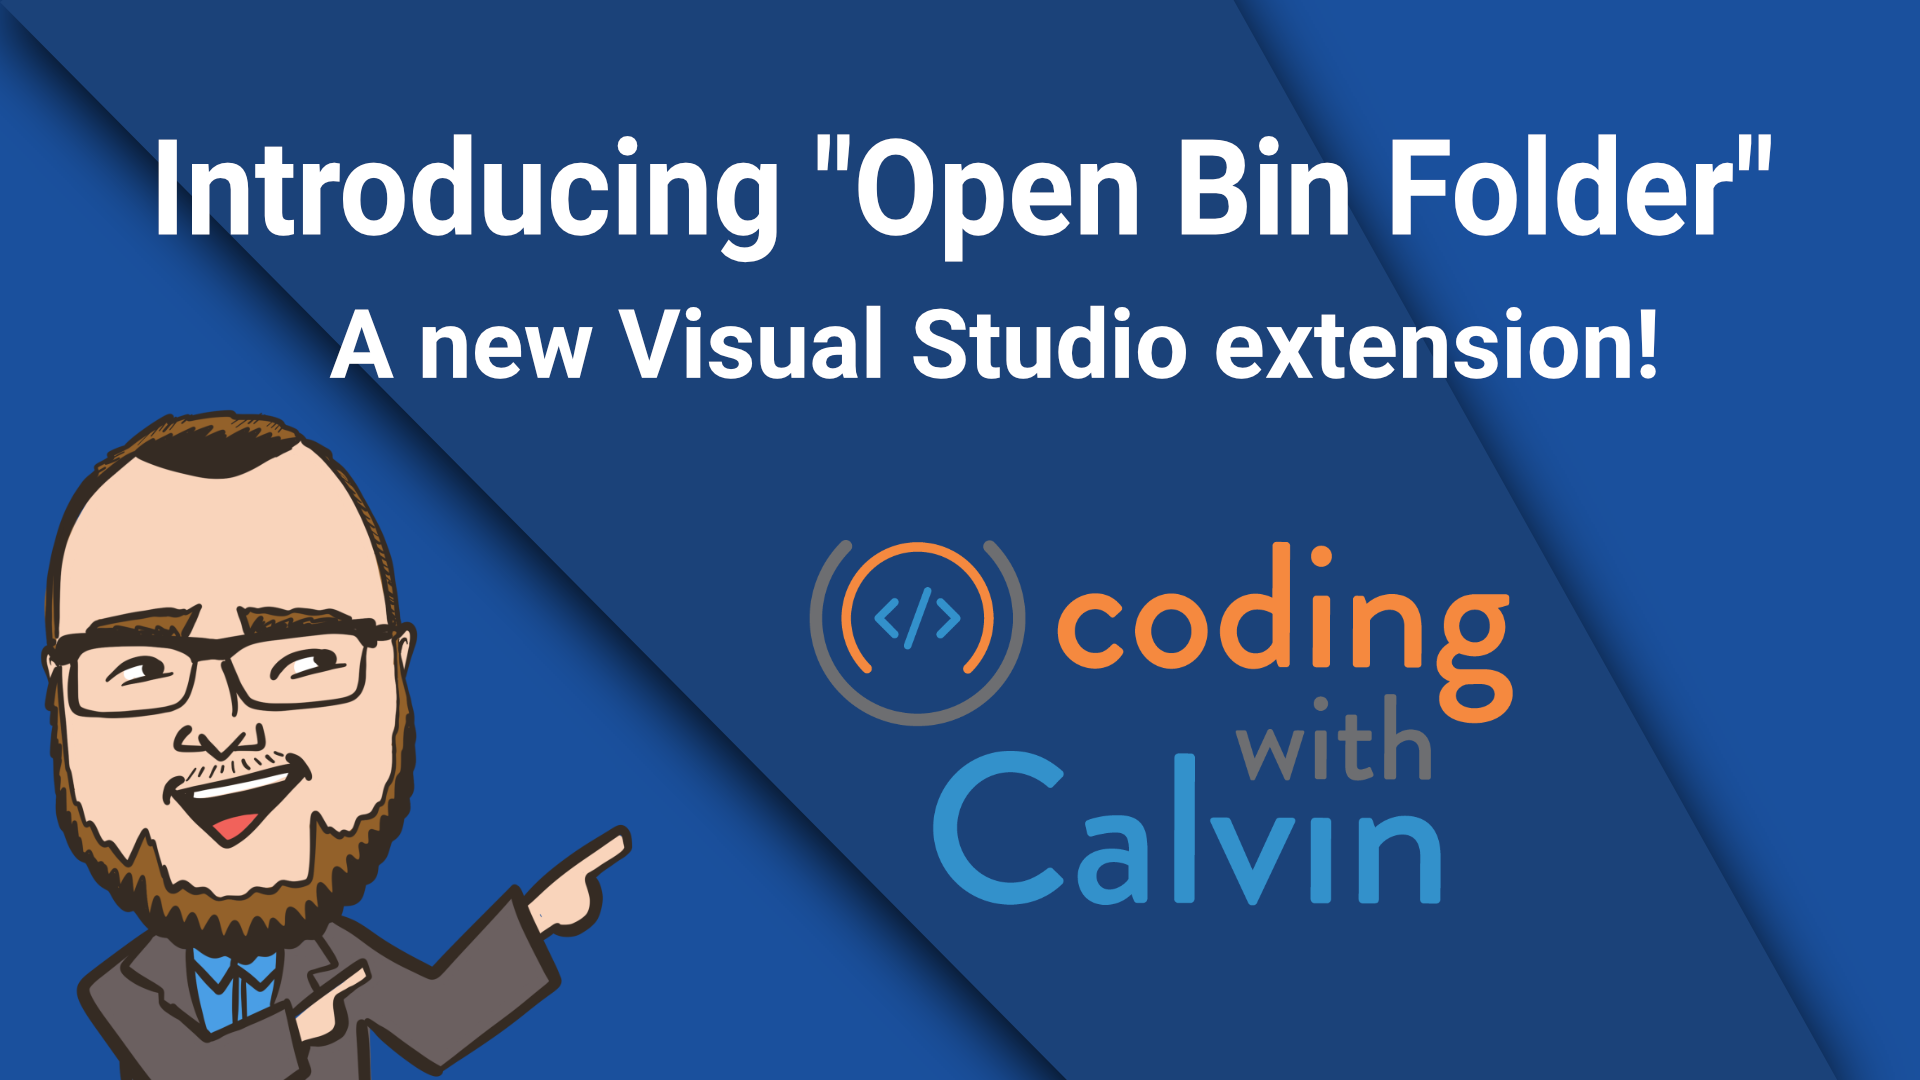 Introducing the 'Open Bin Folder' Visual Studio extension!